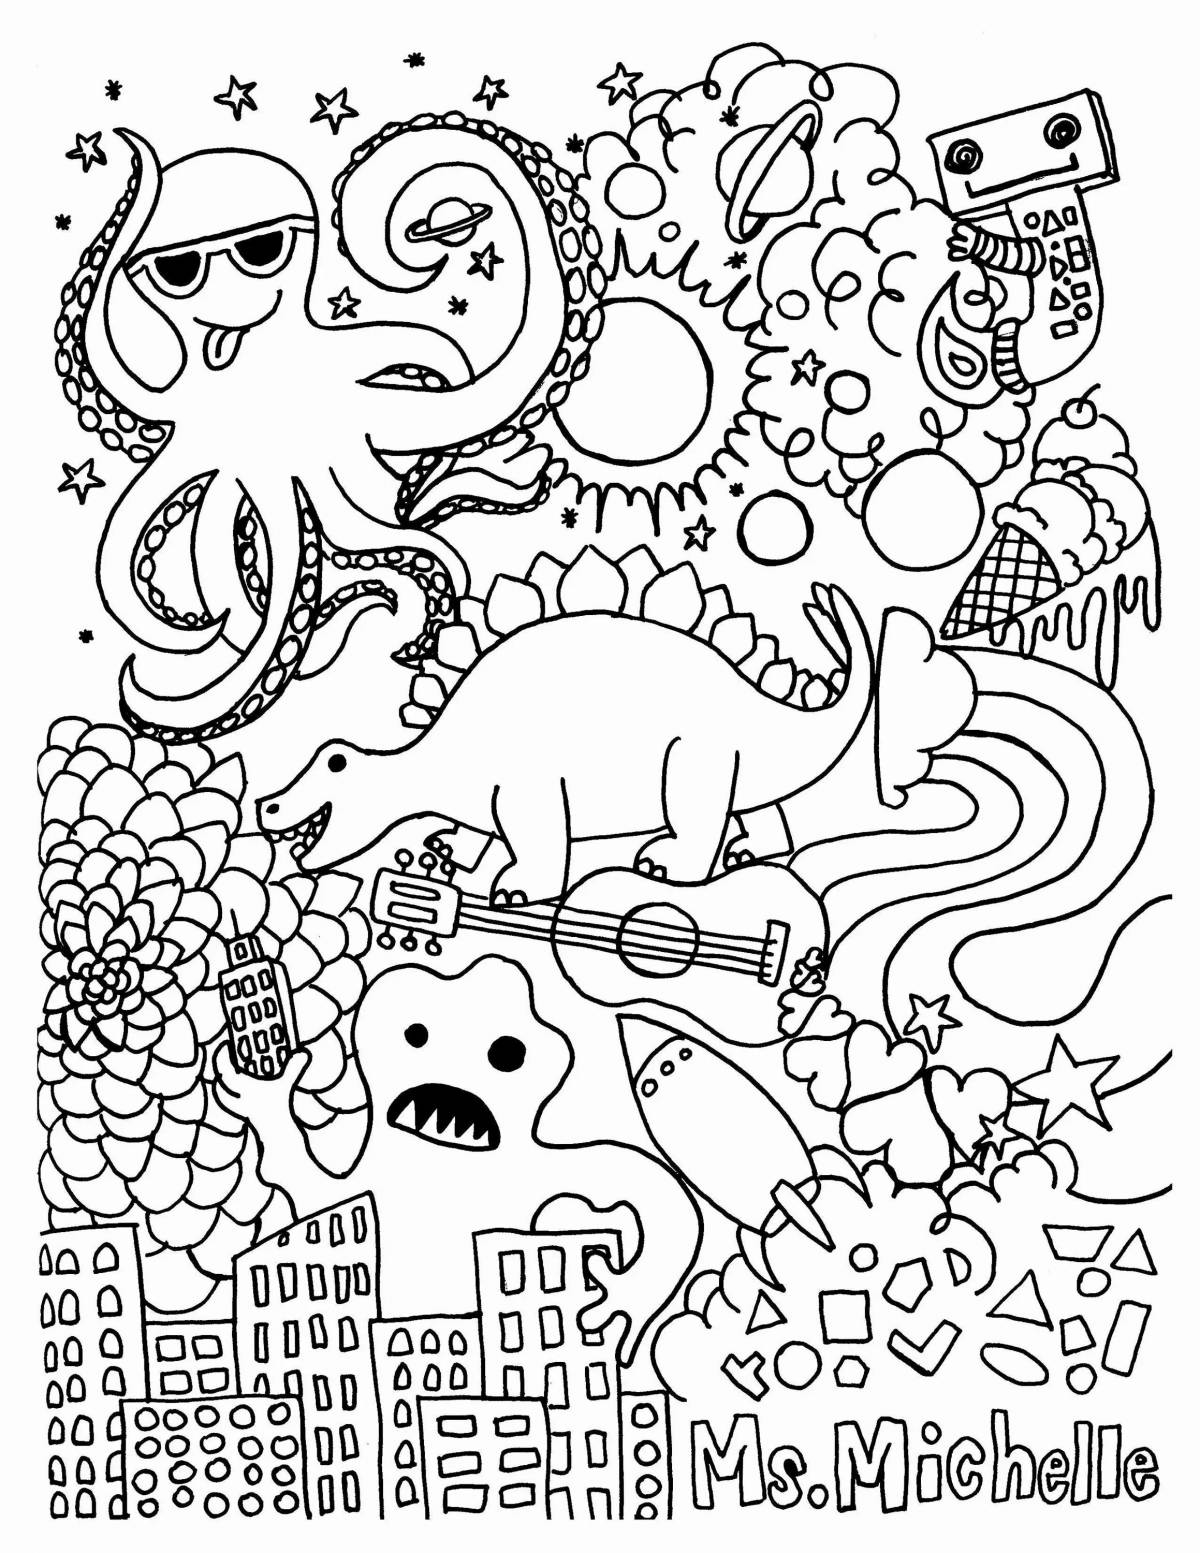 Fun coloring page poster indie kid